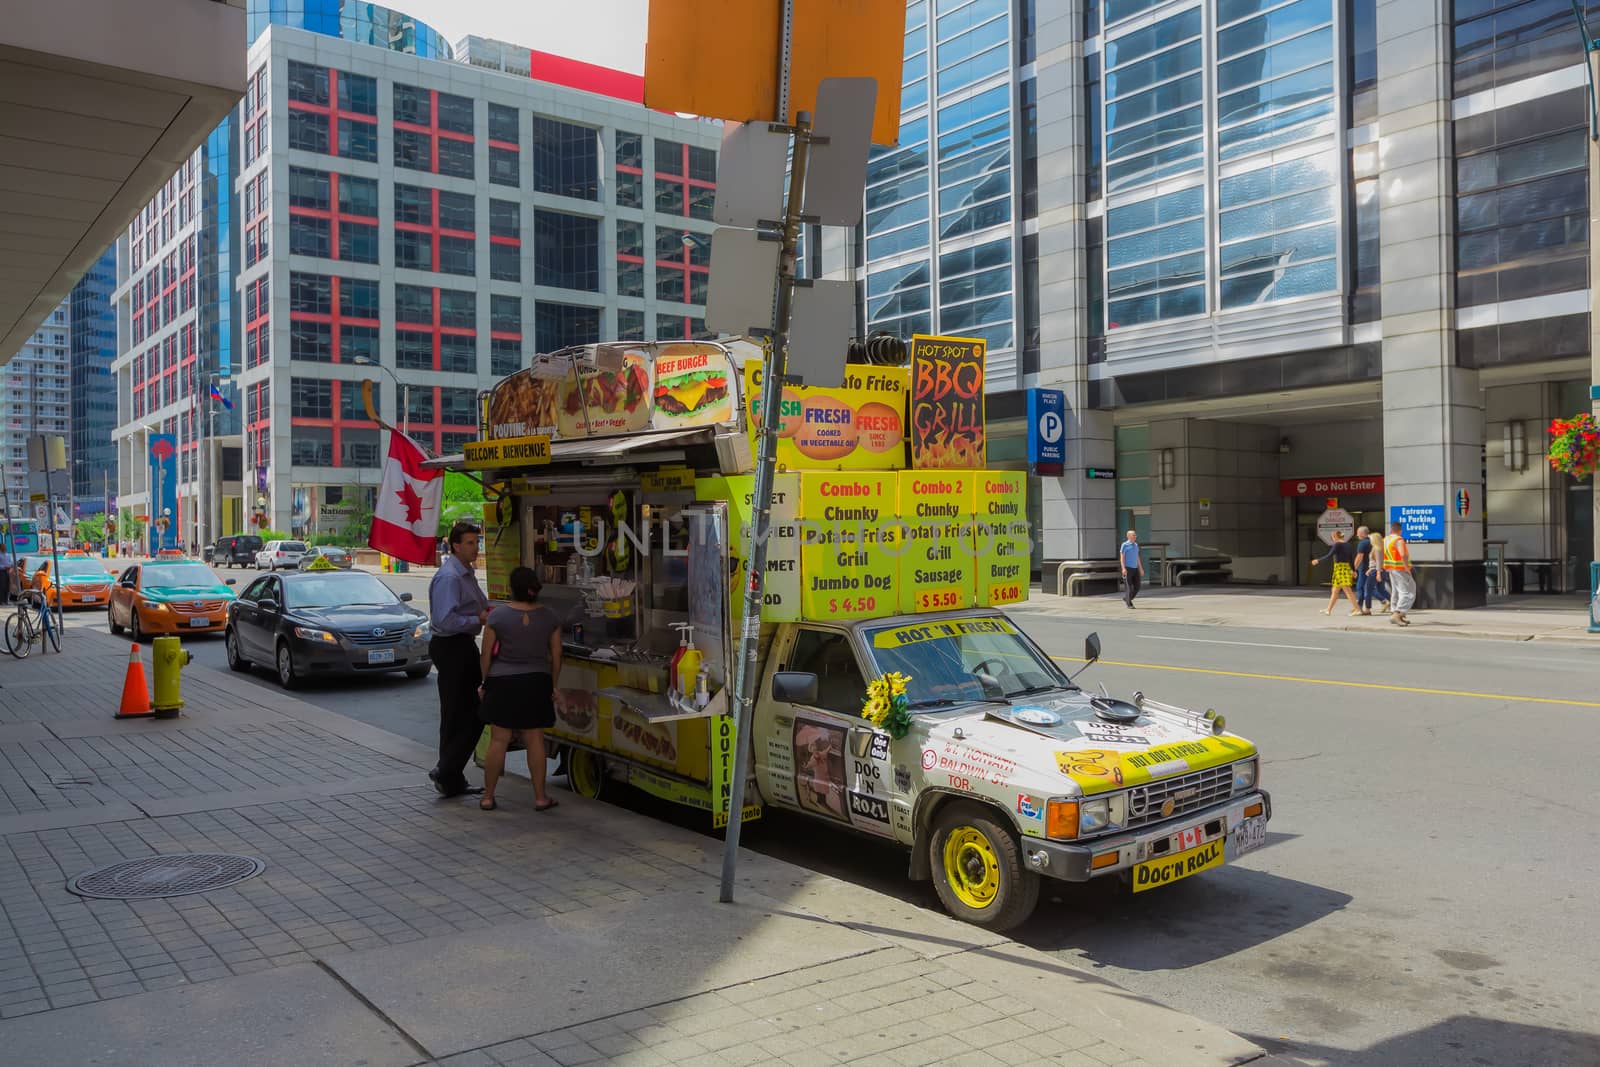 A hotdog selling car in downtown Toronto city, Ontario, Canada.